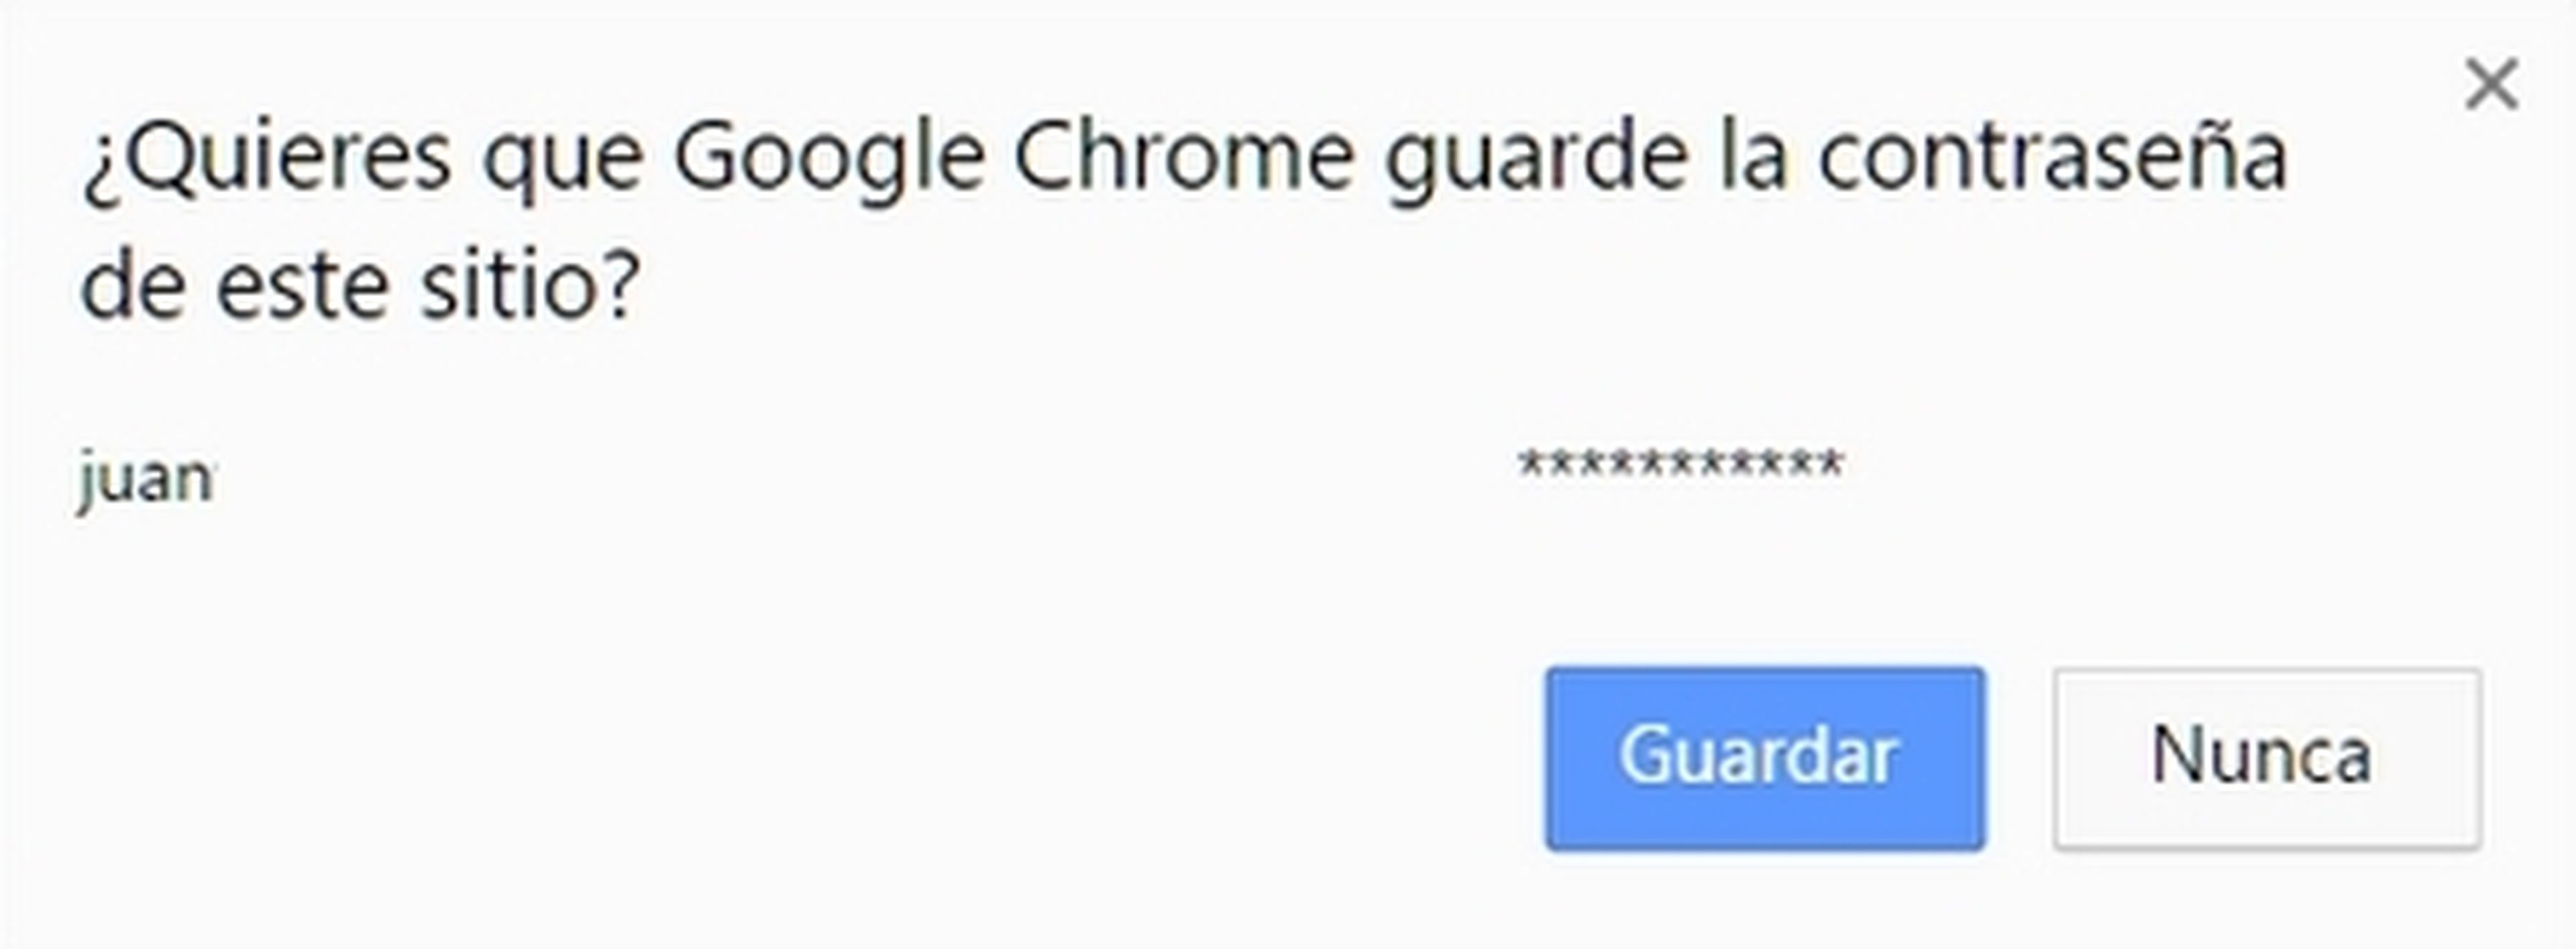 Cómo administrar las contraseñas que guardas en Google Chrome